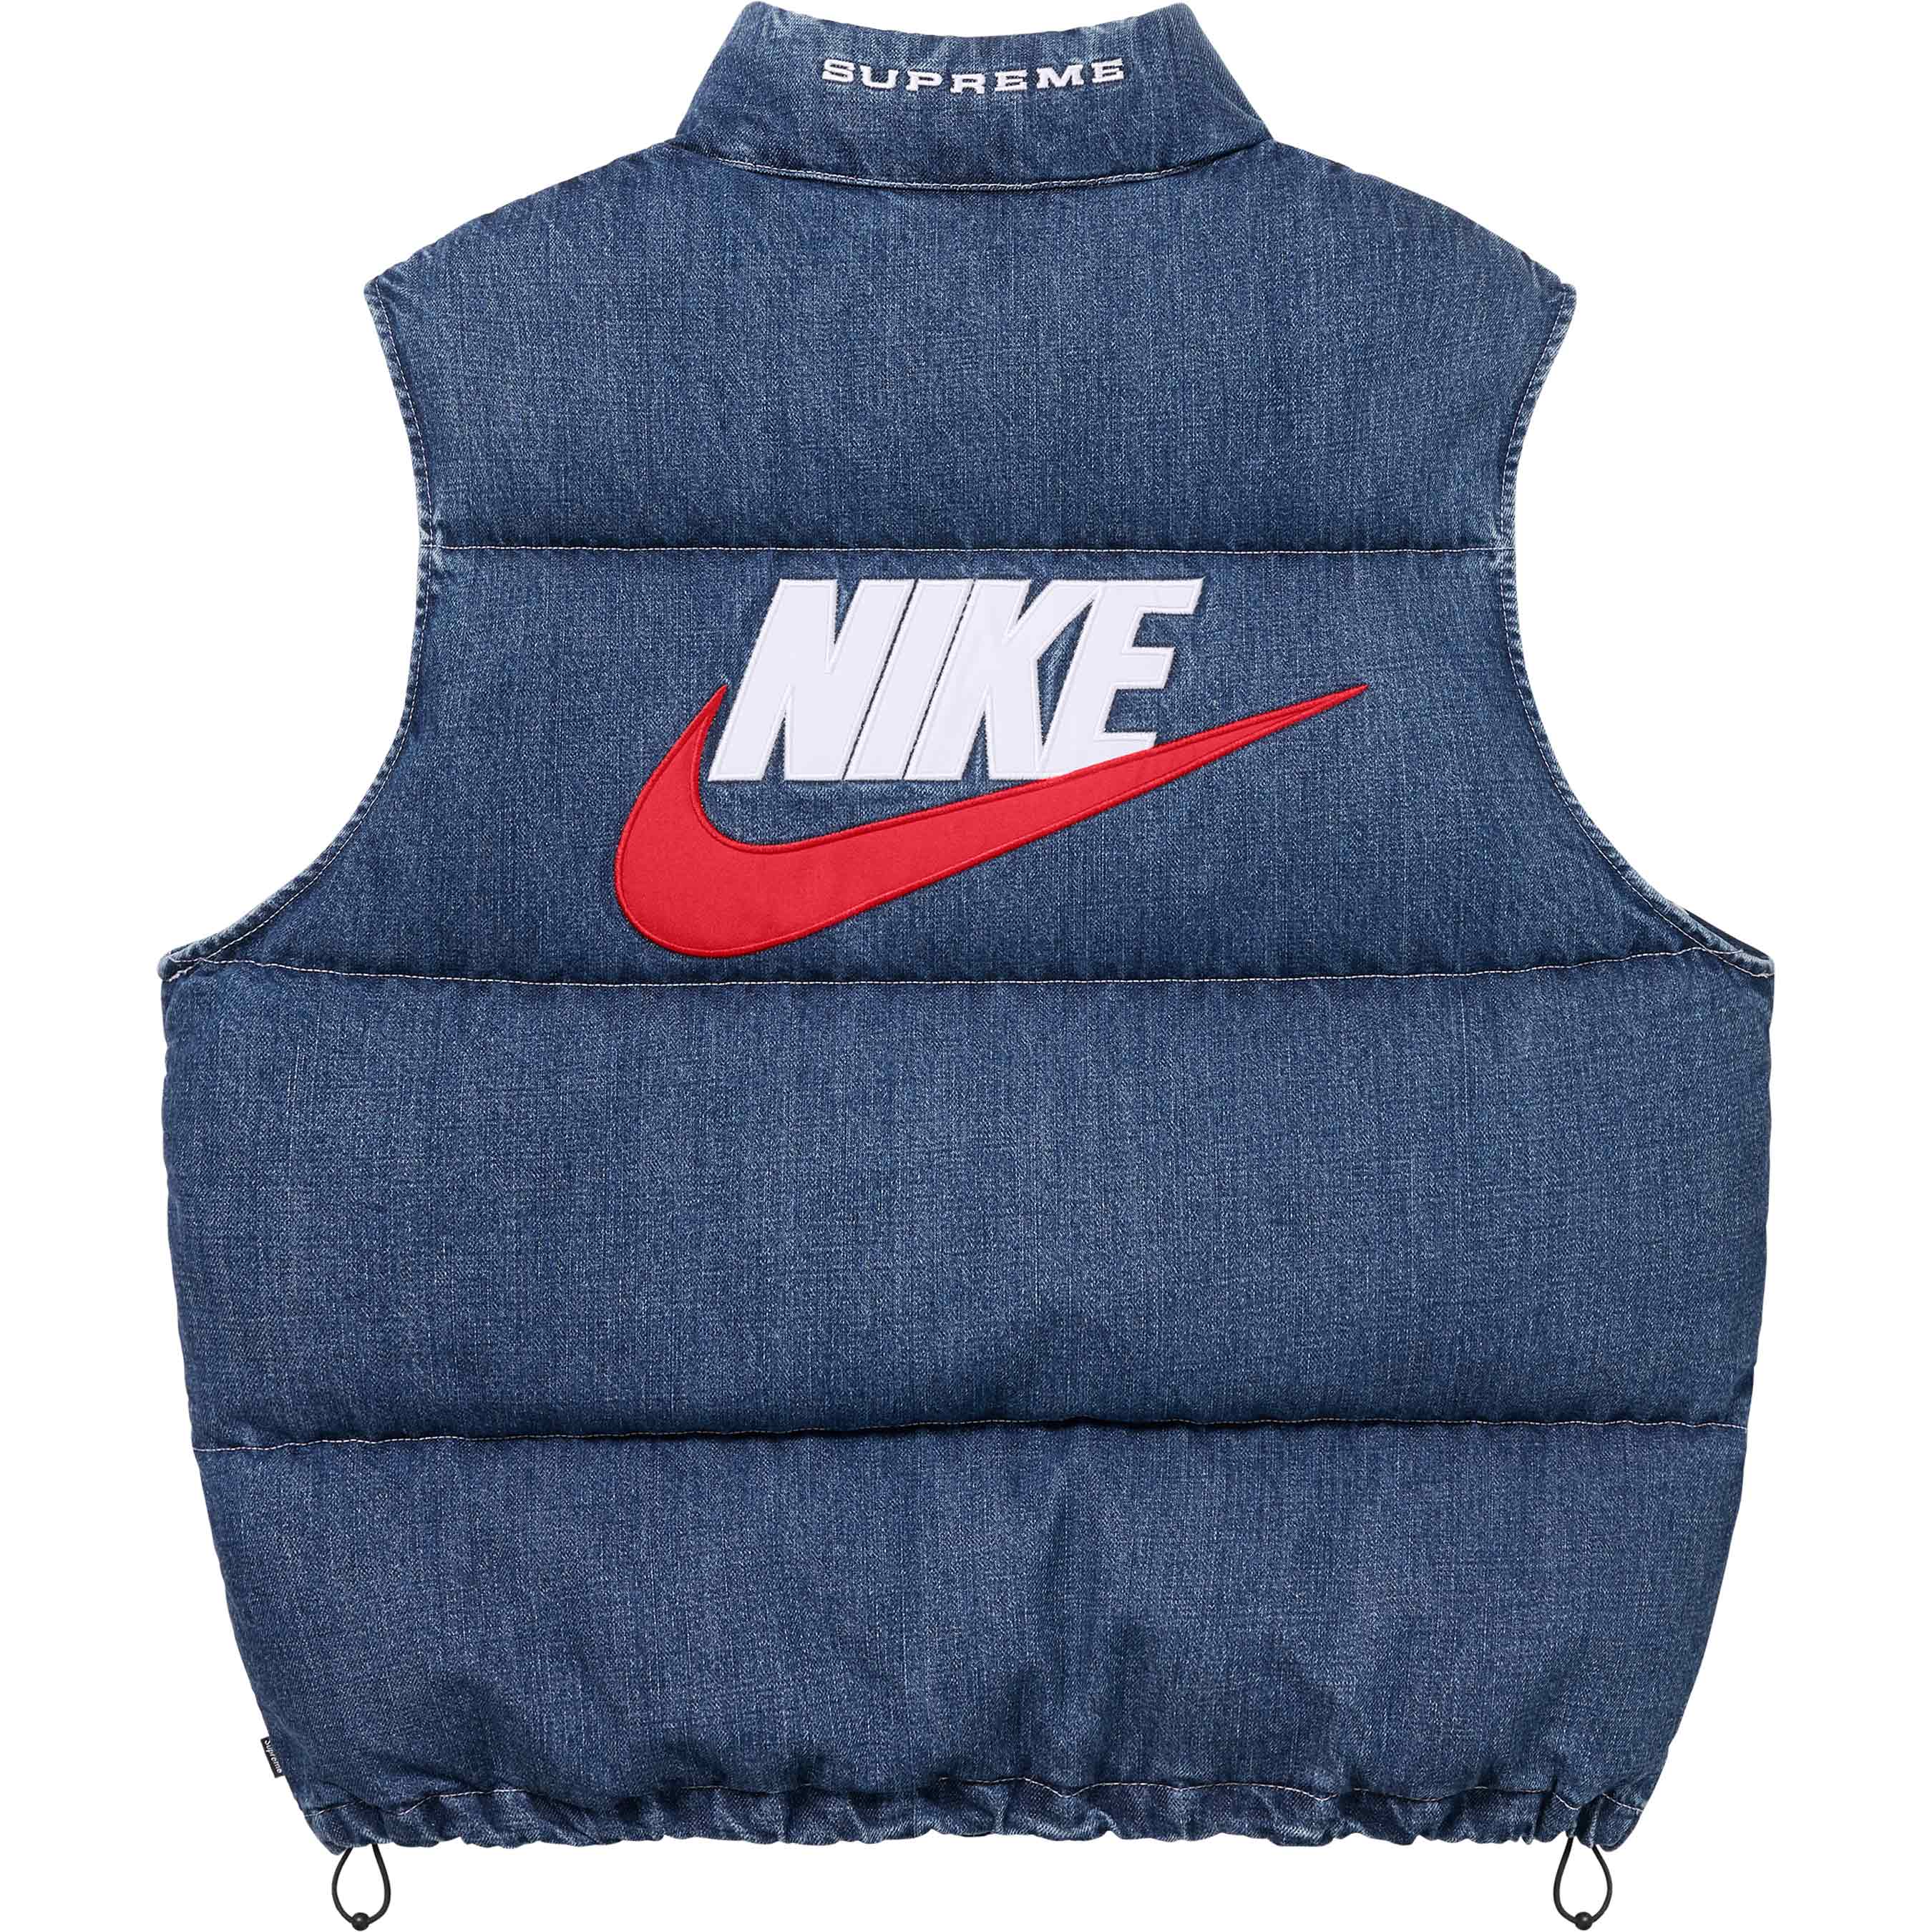 Supreme®/Nike® Denim Puffer Vest - Shop - Supreme